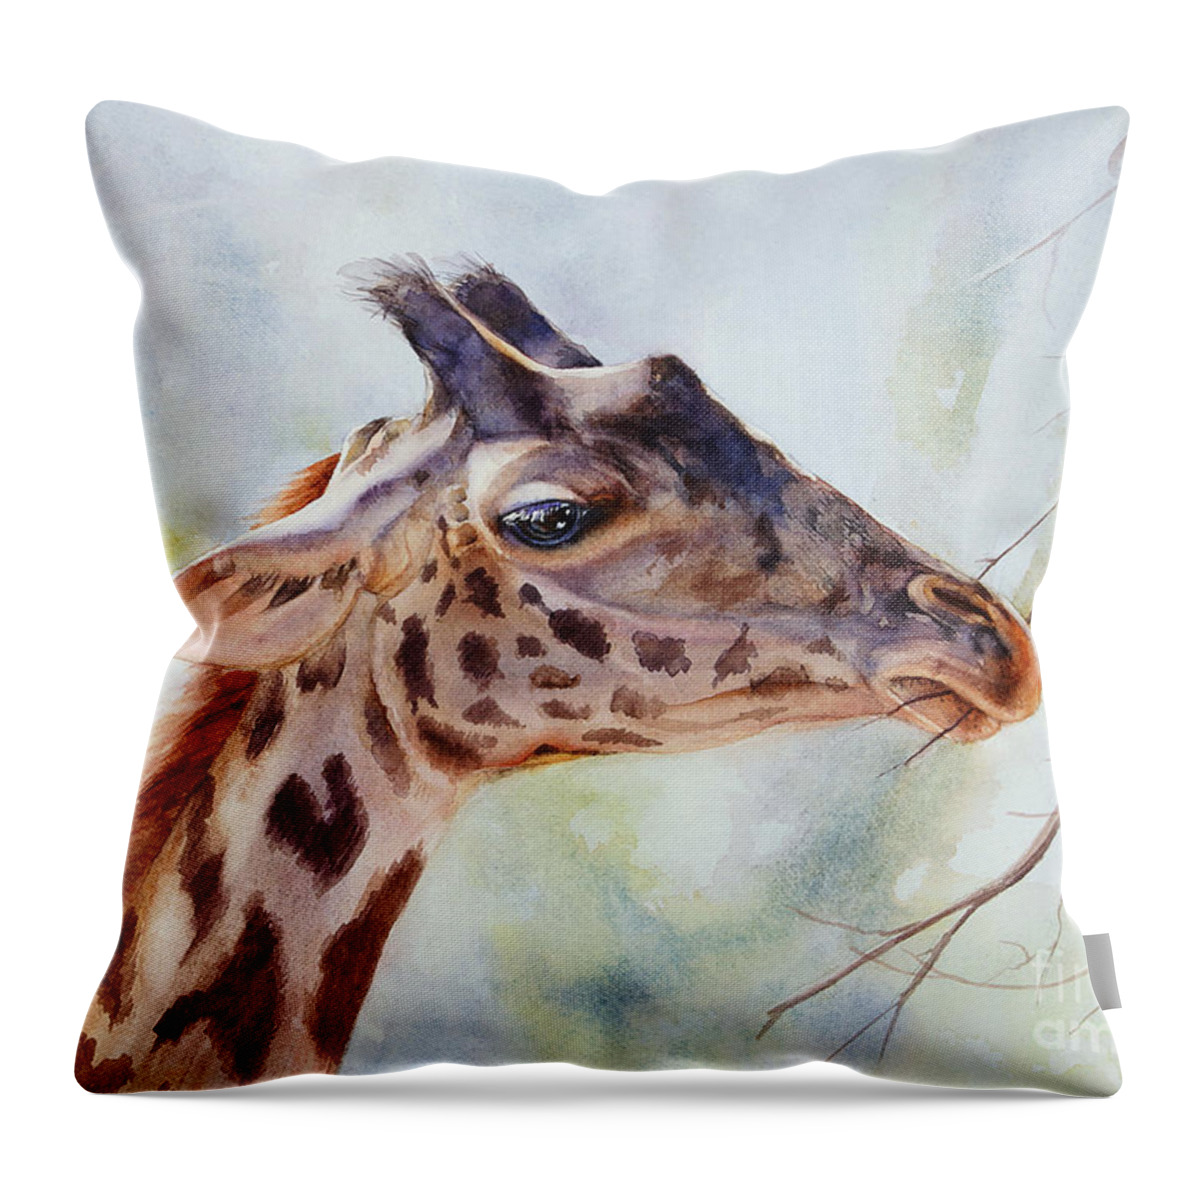 Giraffe Throw Pillow featuring the painting Giraffe Eating by Bonnie Rinier